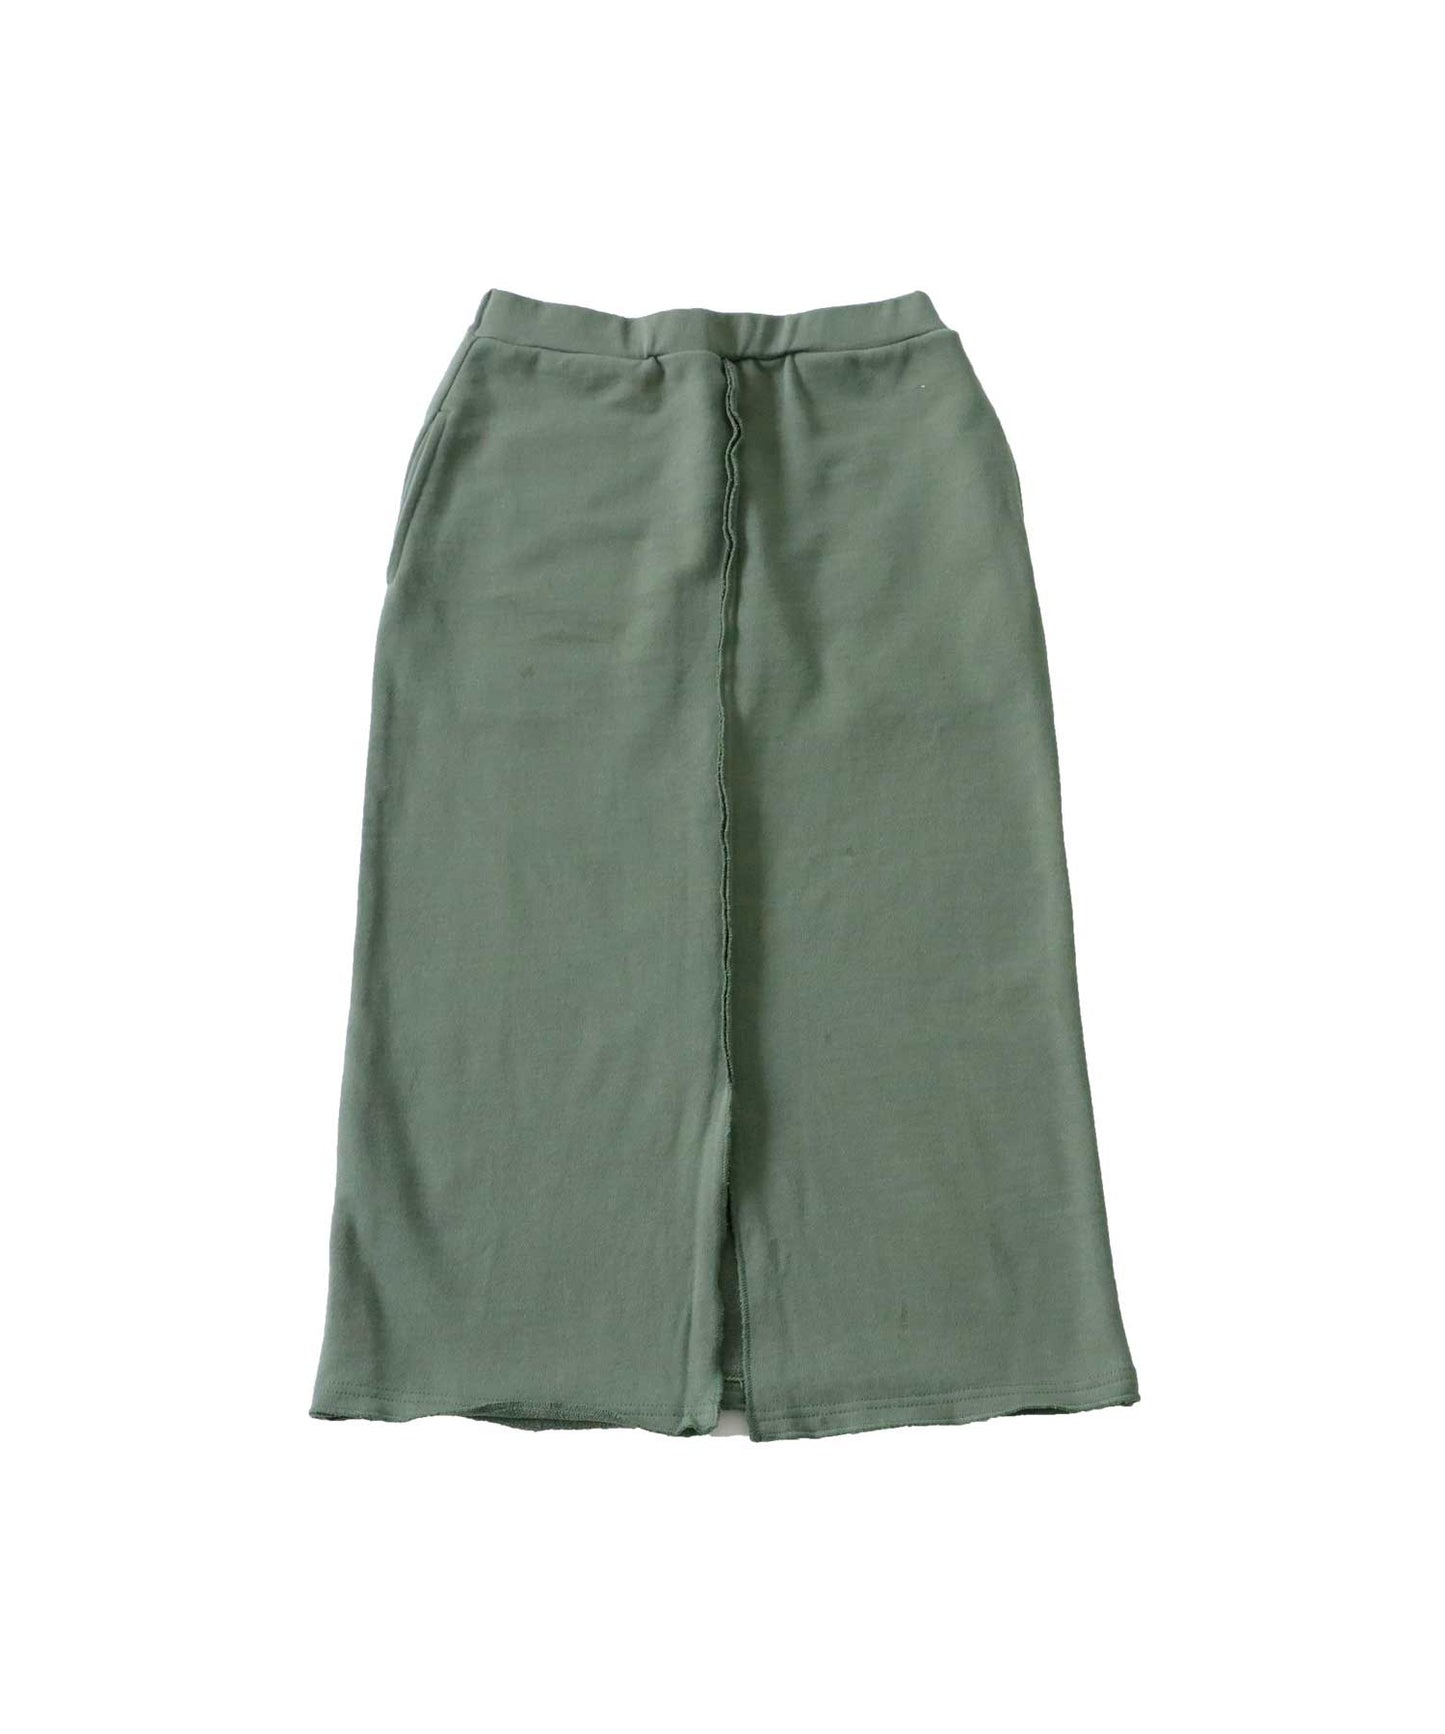 Pile fabric Long Ladies skirt cotton 100%